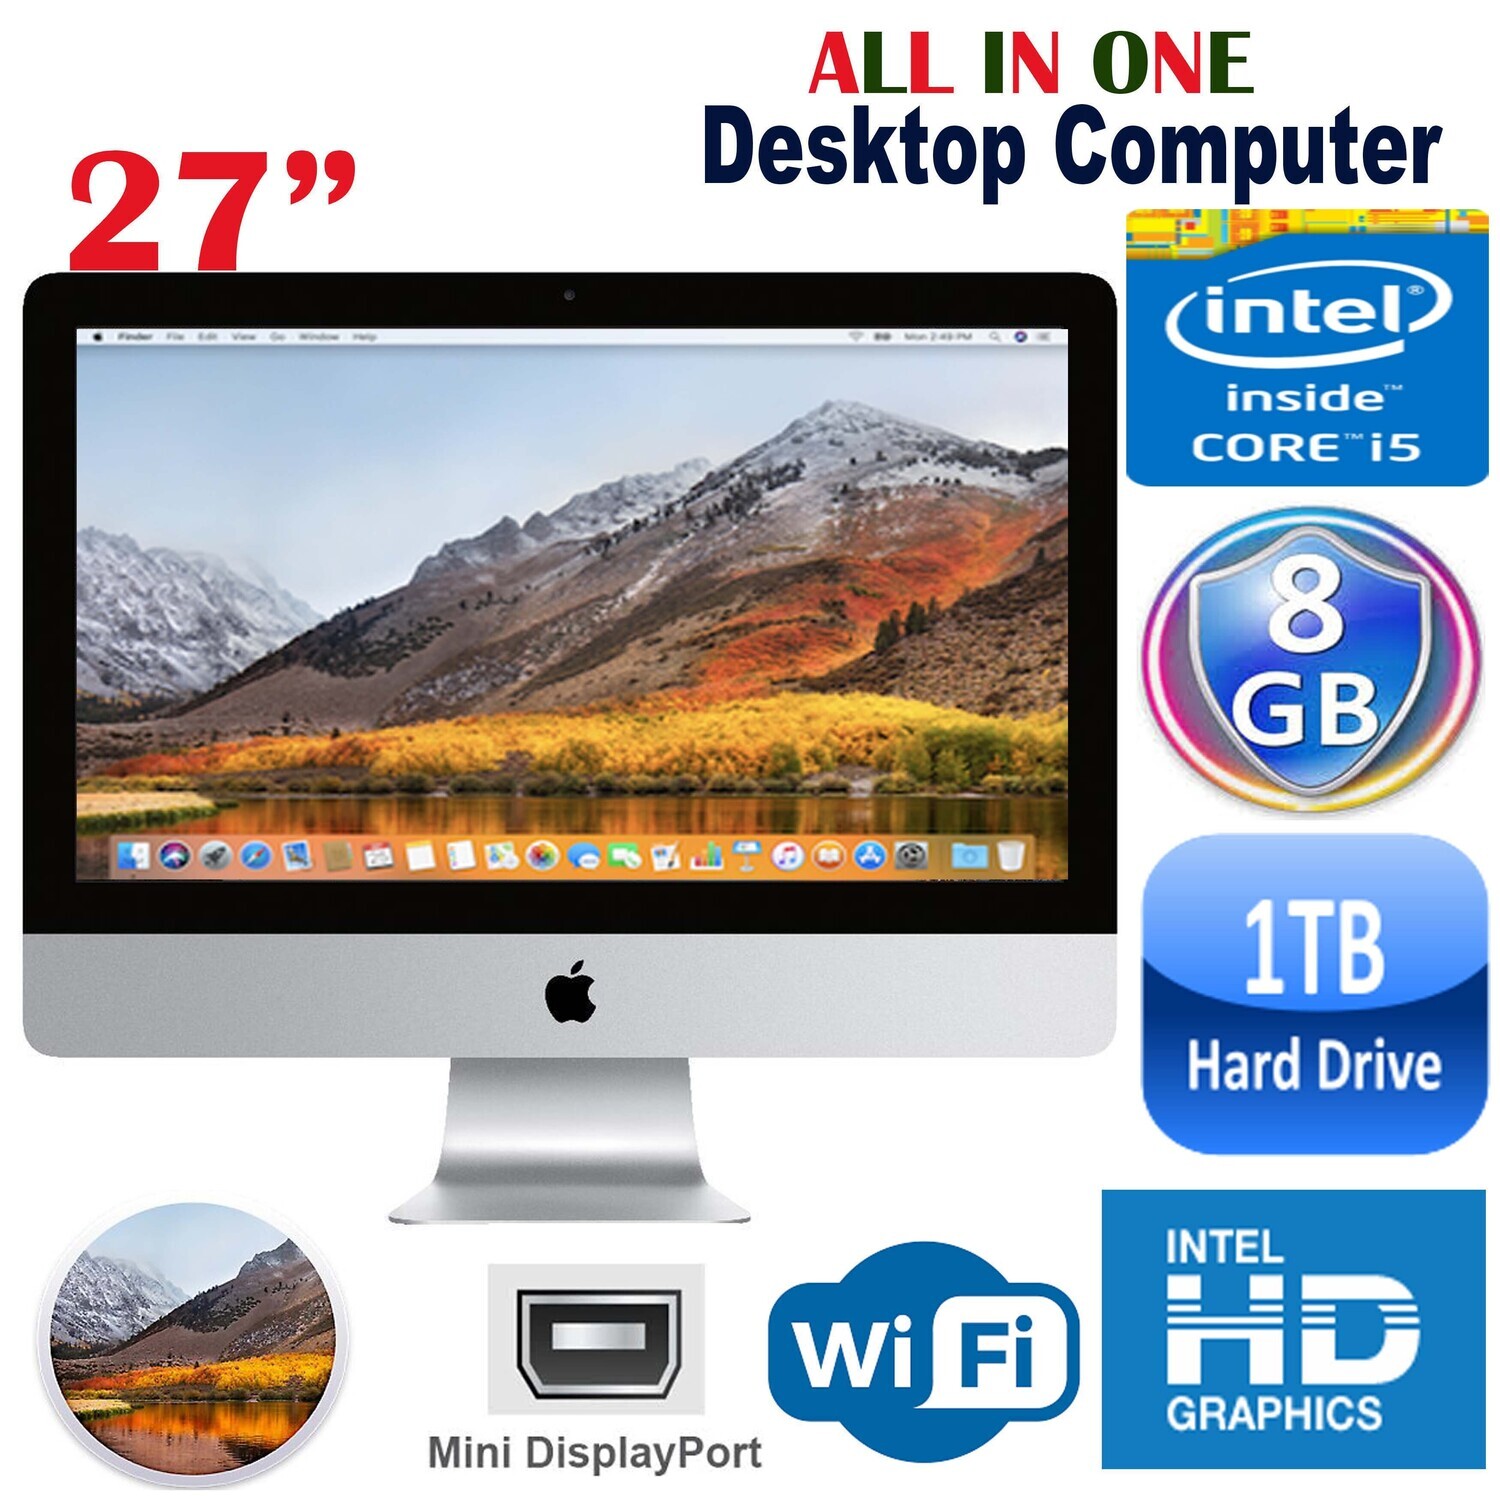 Apple iMac A1312 27” 2010 i5 8GB 1TB AIO Desktop PC HD Graphic MacOS High Sierra